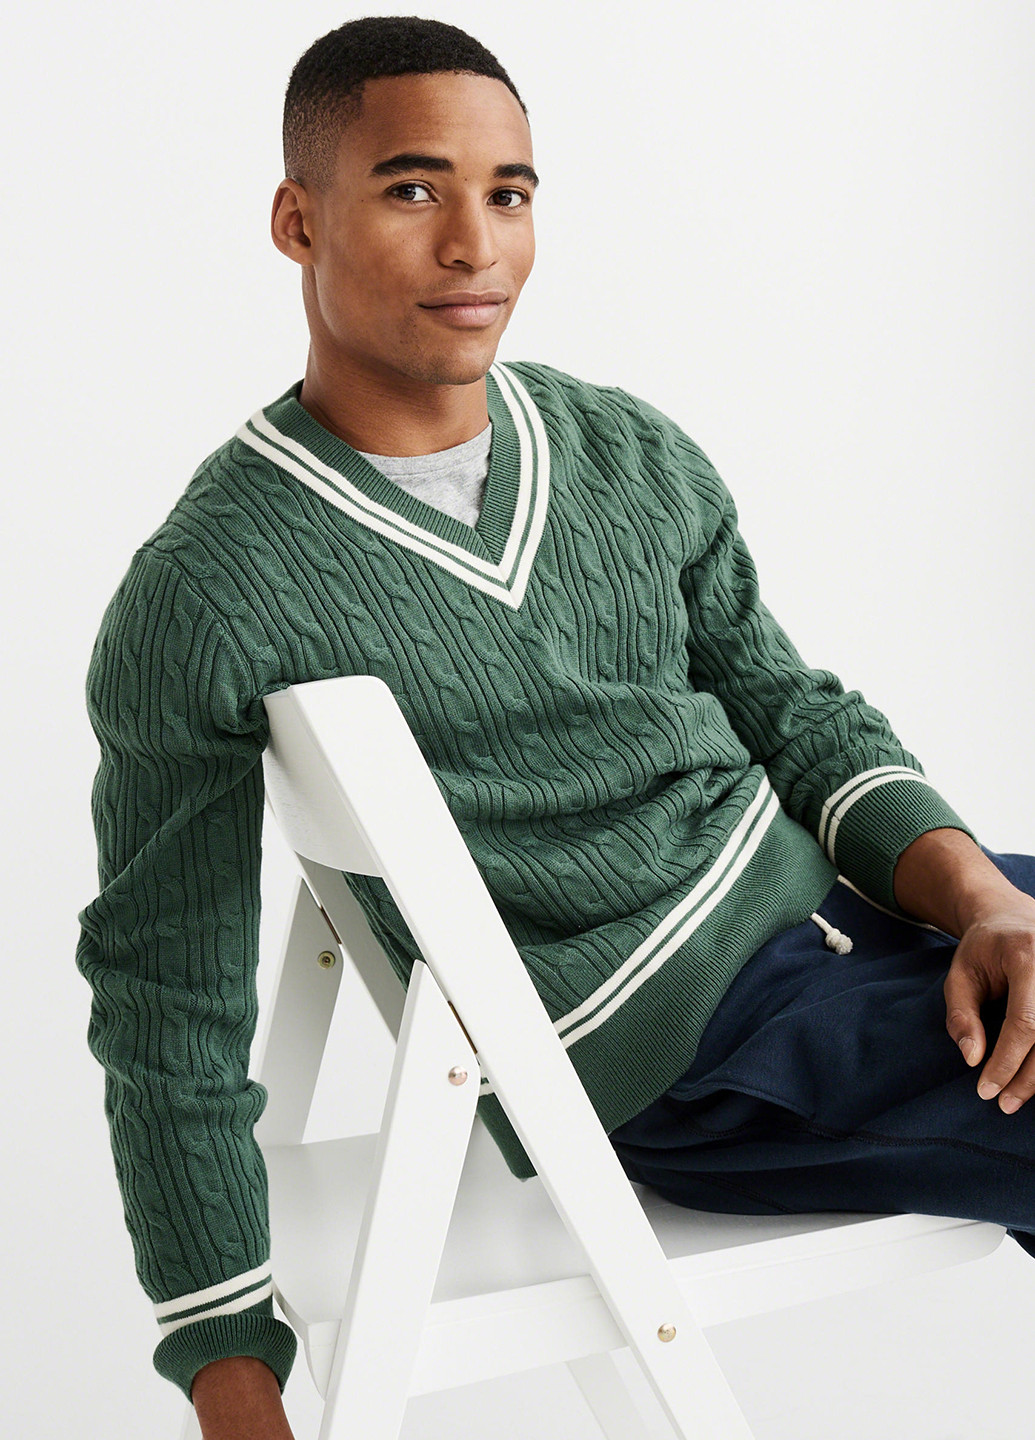 Зеленый демисезонный пуловер пуловер Abercrombie & Fitch